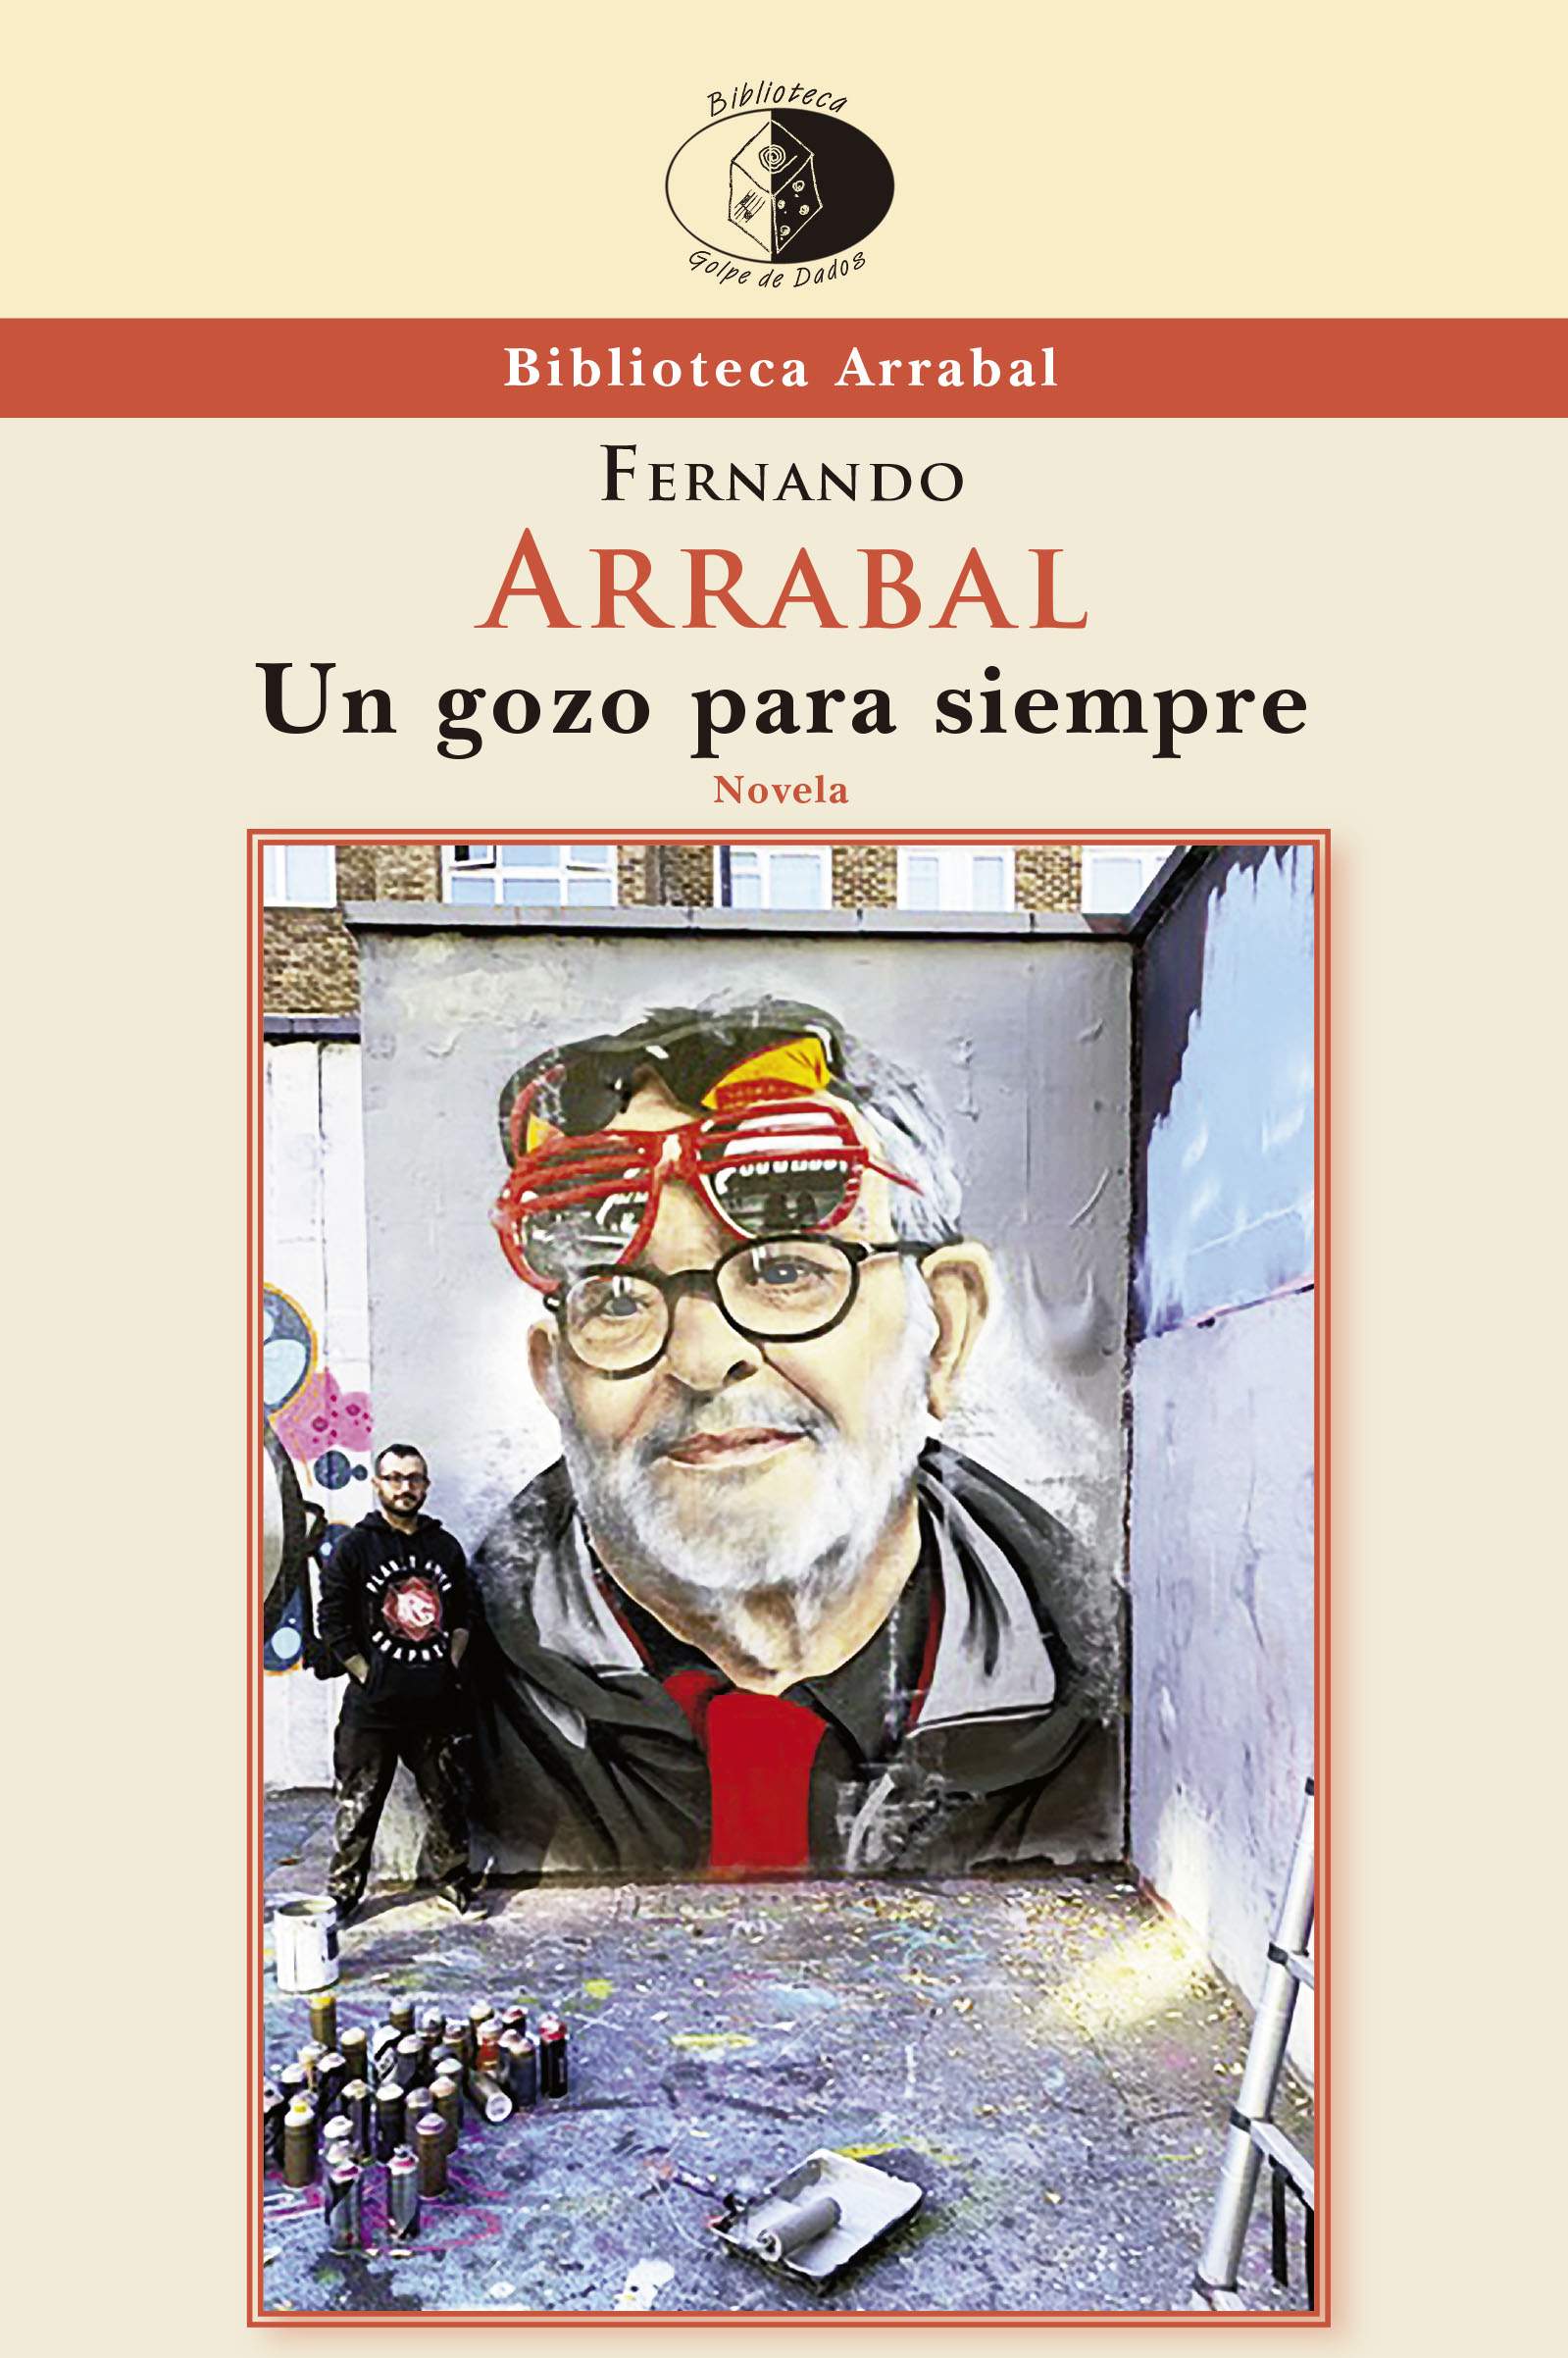 Novedad: Un gozo para siempre, de Fernando Arrabal –Novela—